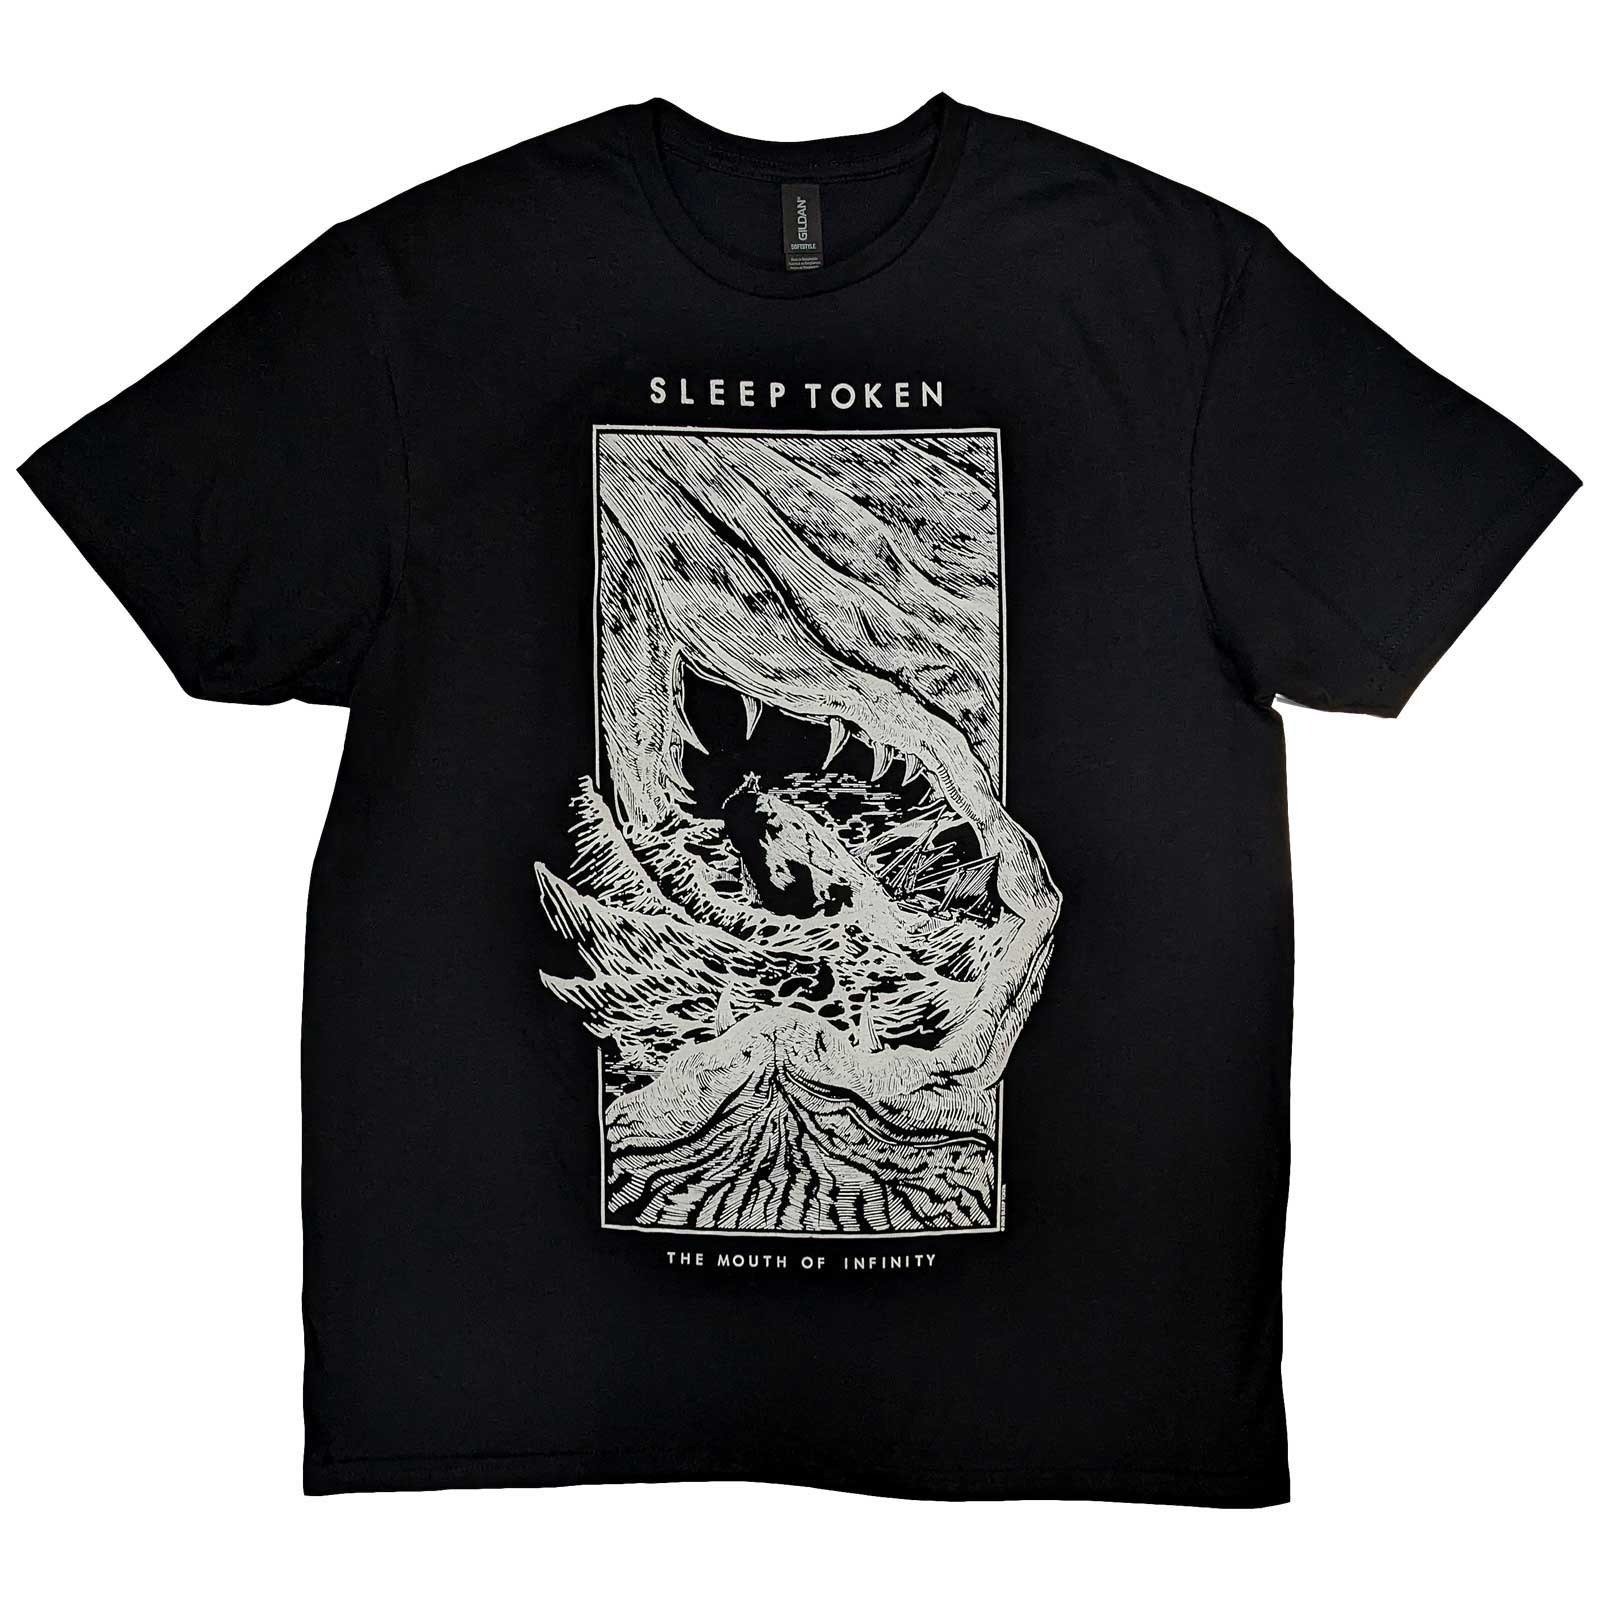 Mesery Sleep Shirt Cotton Thin Strap - Gray @ Best Price Online